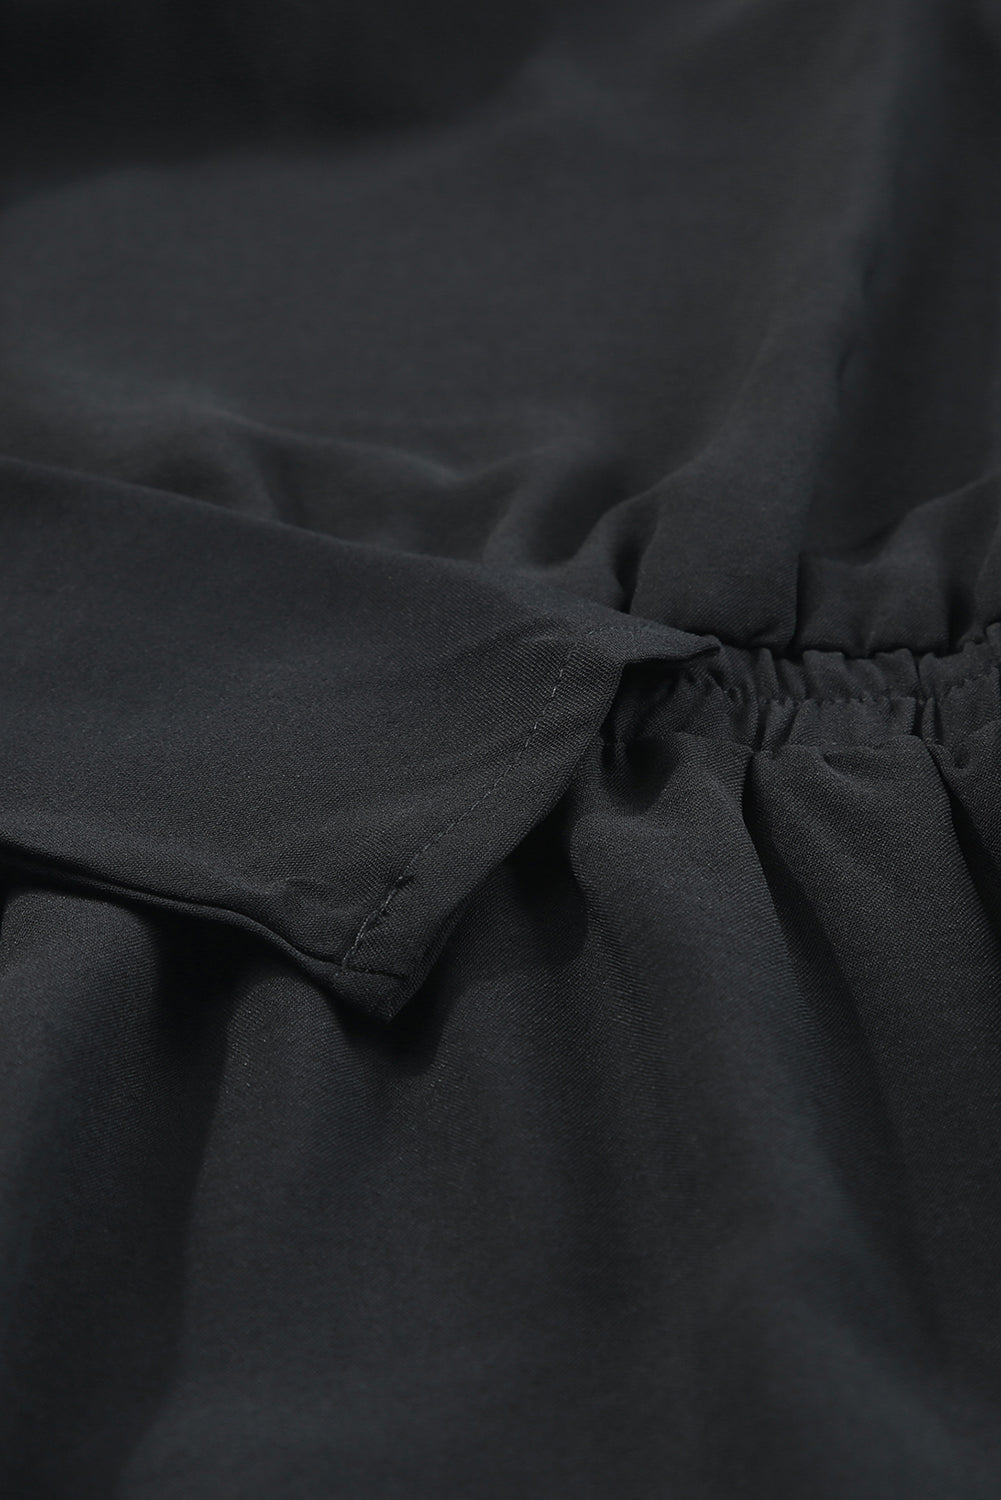 Black Ruffled V Neck Cut-out Back Elastic Waist Dress